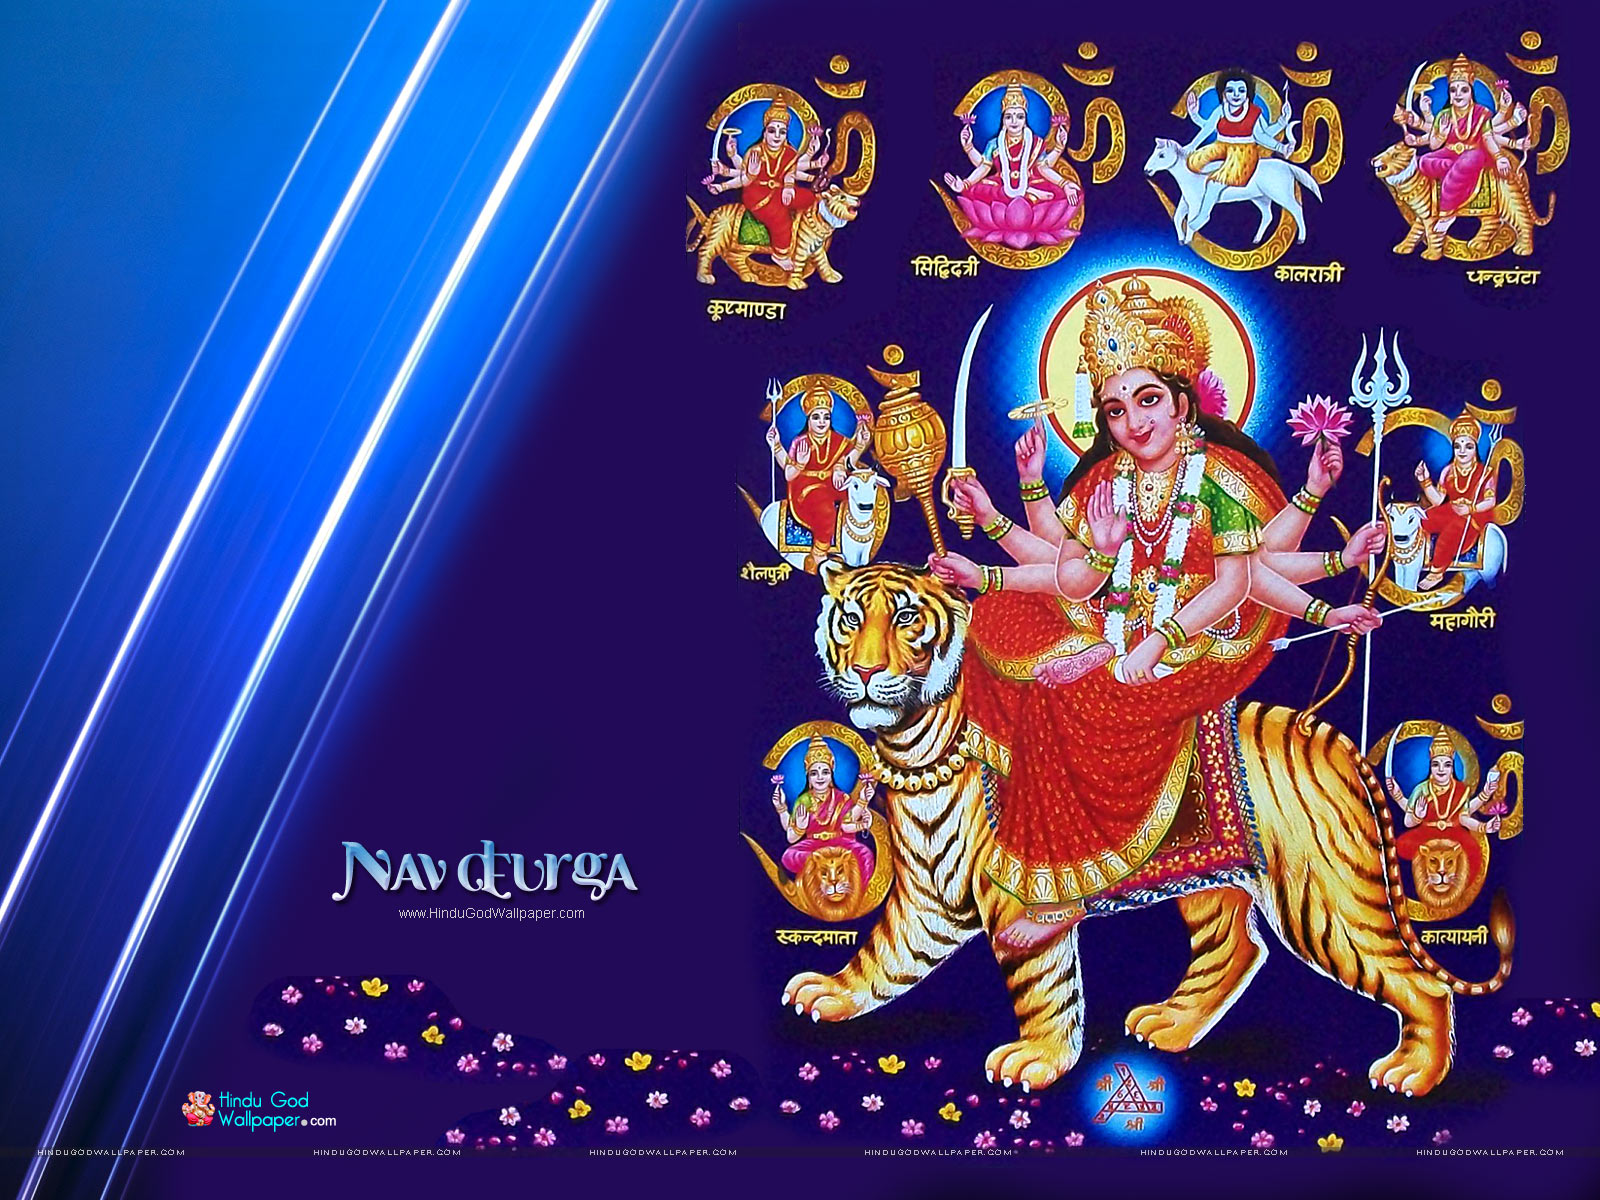 Maa Durga 9 Roop Wallpaper HD Images and Photos Free Download